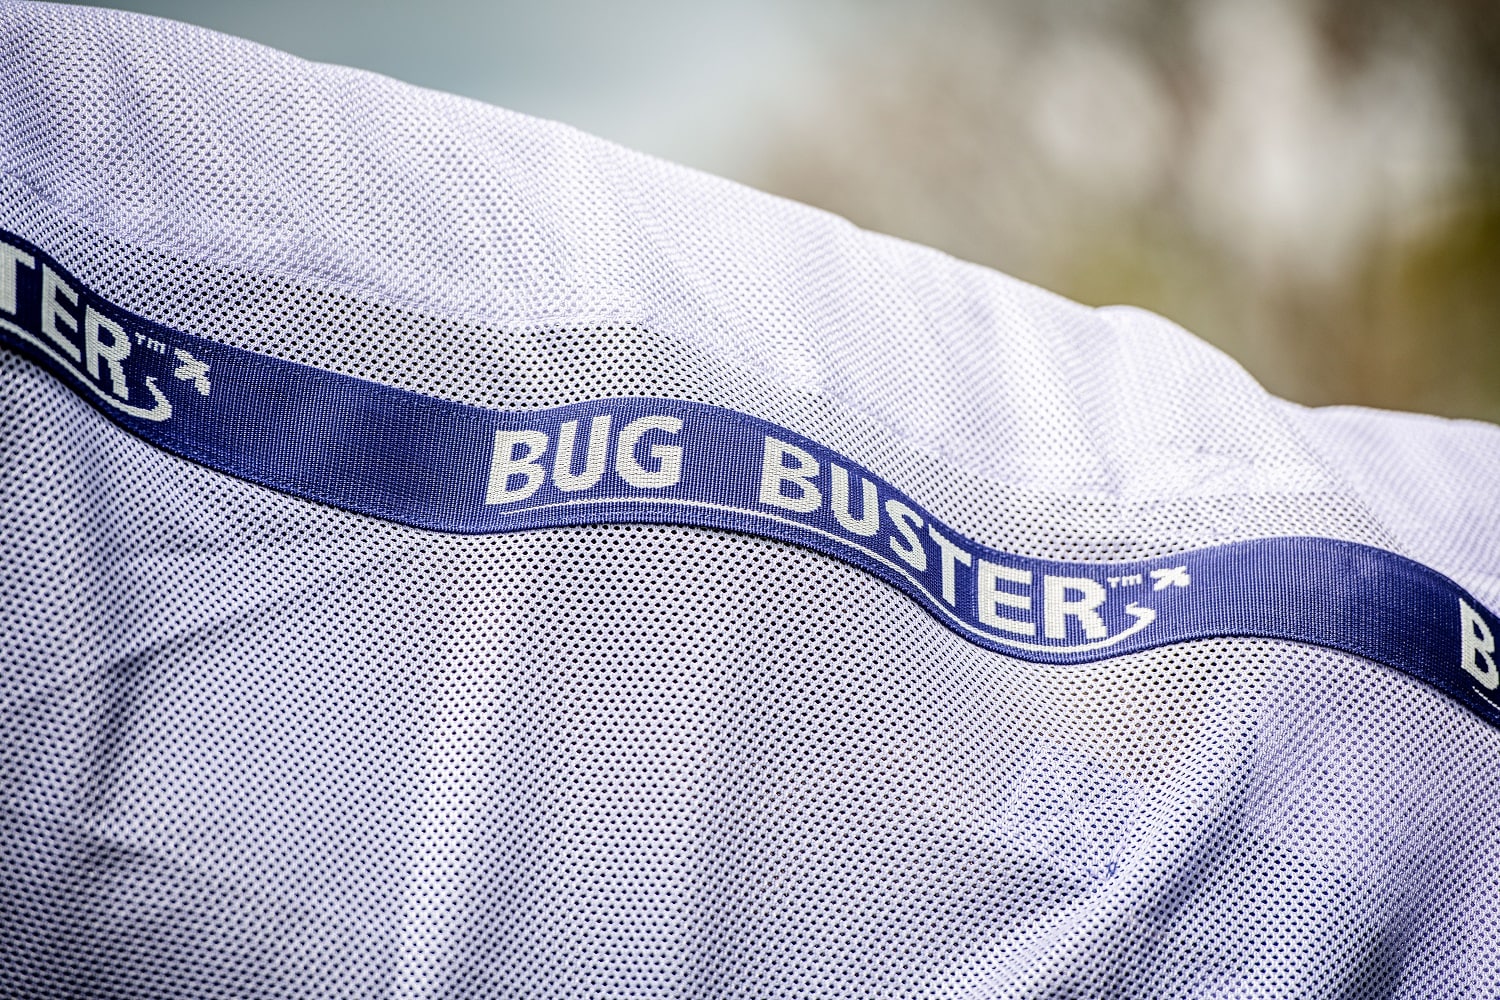 Amigo Bug Buster insektdækken